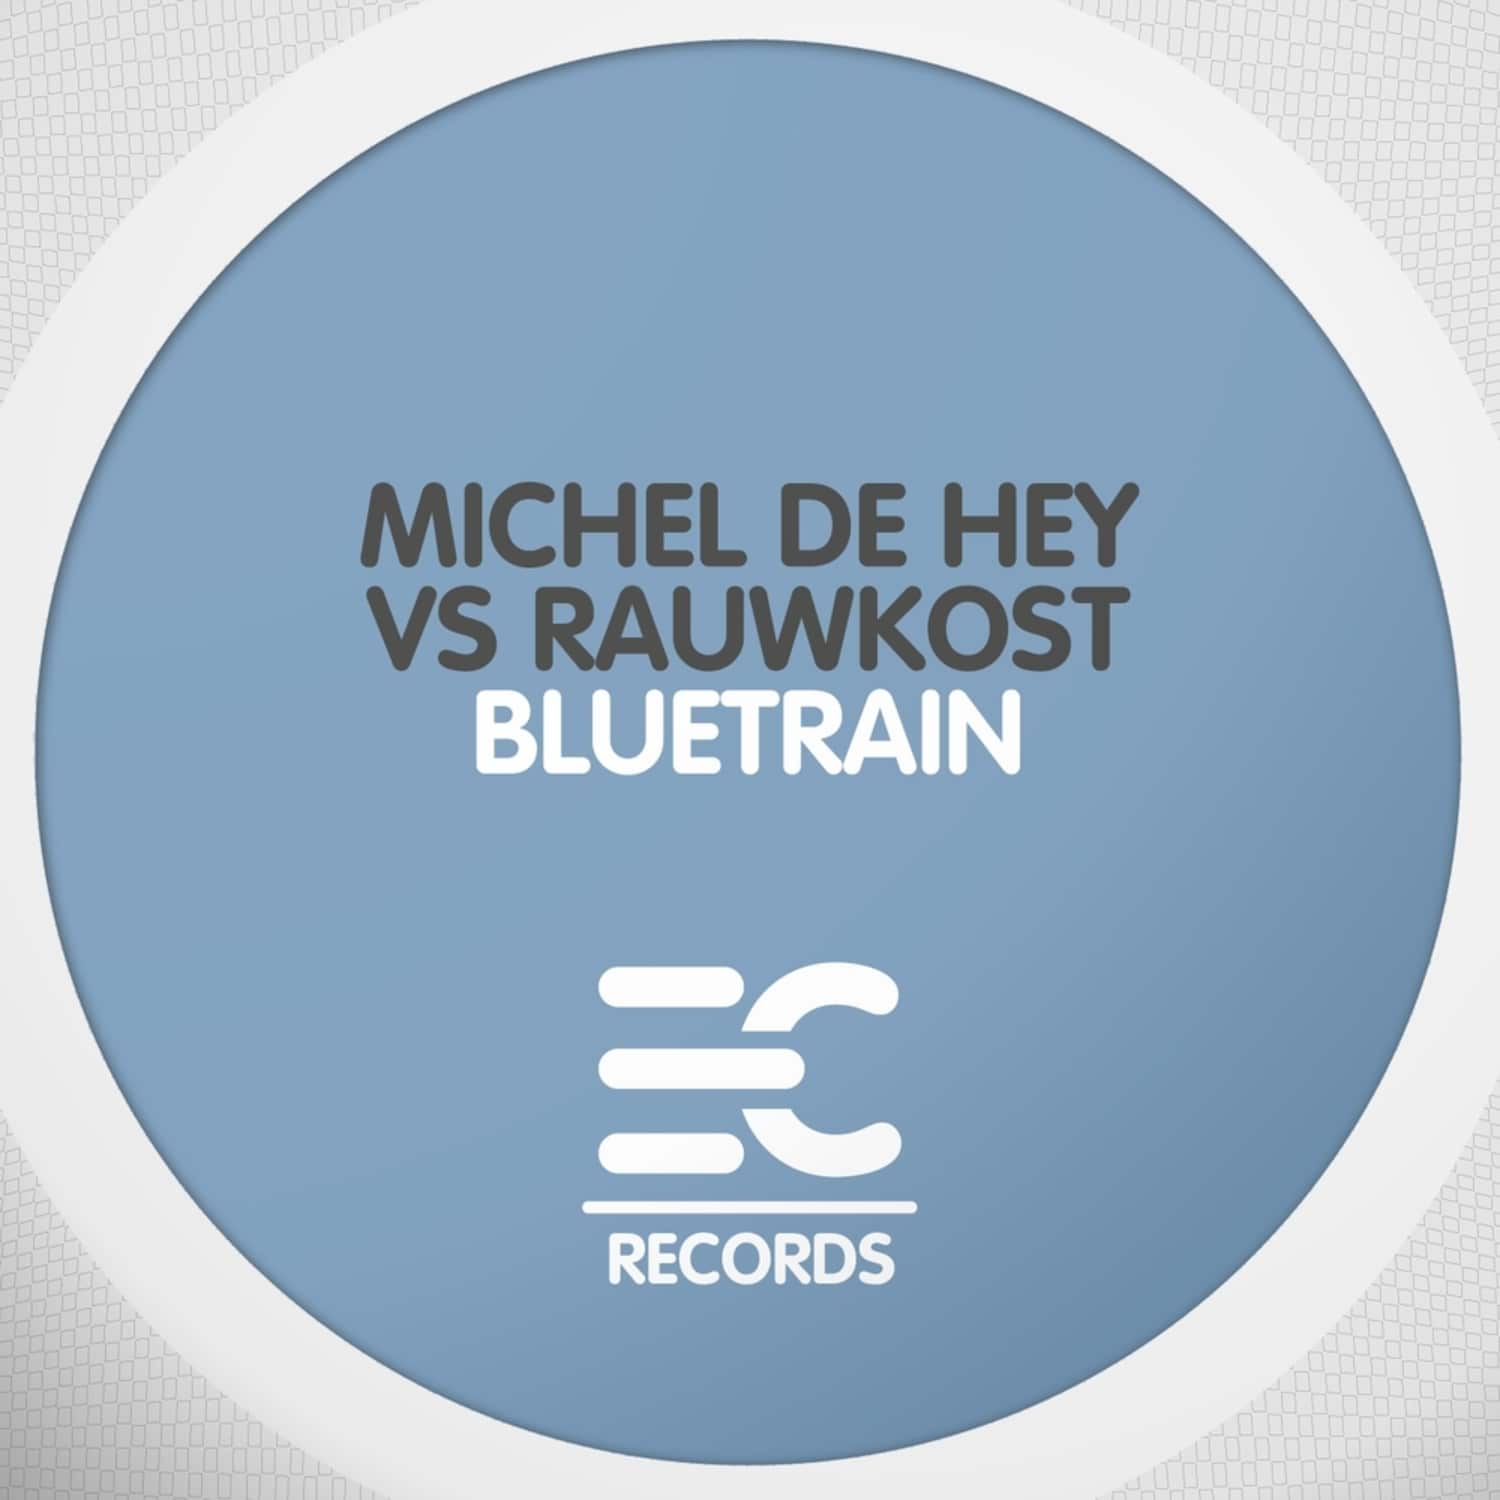 Michel De Hey vs Rauwkost - BLUETRAIN